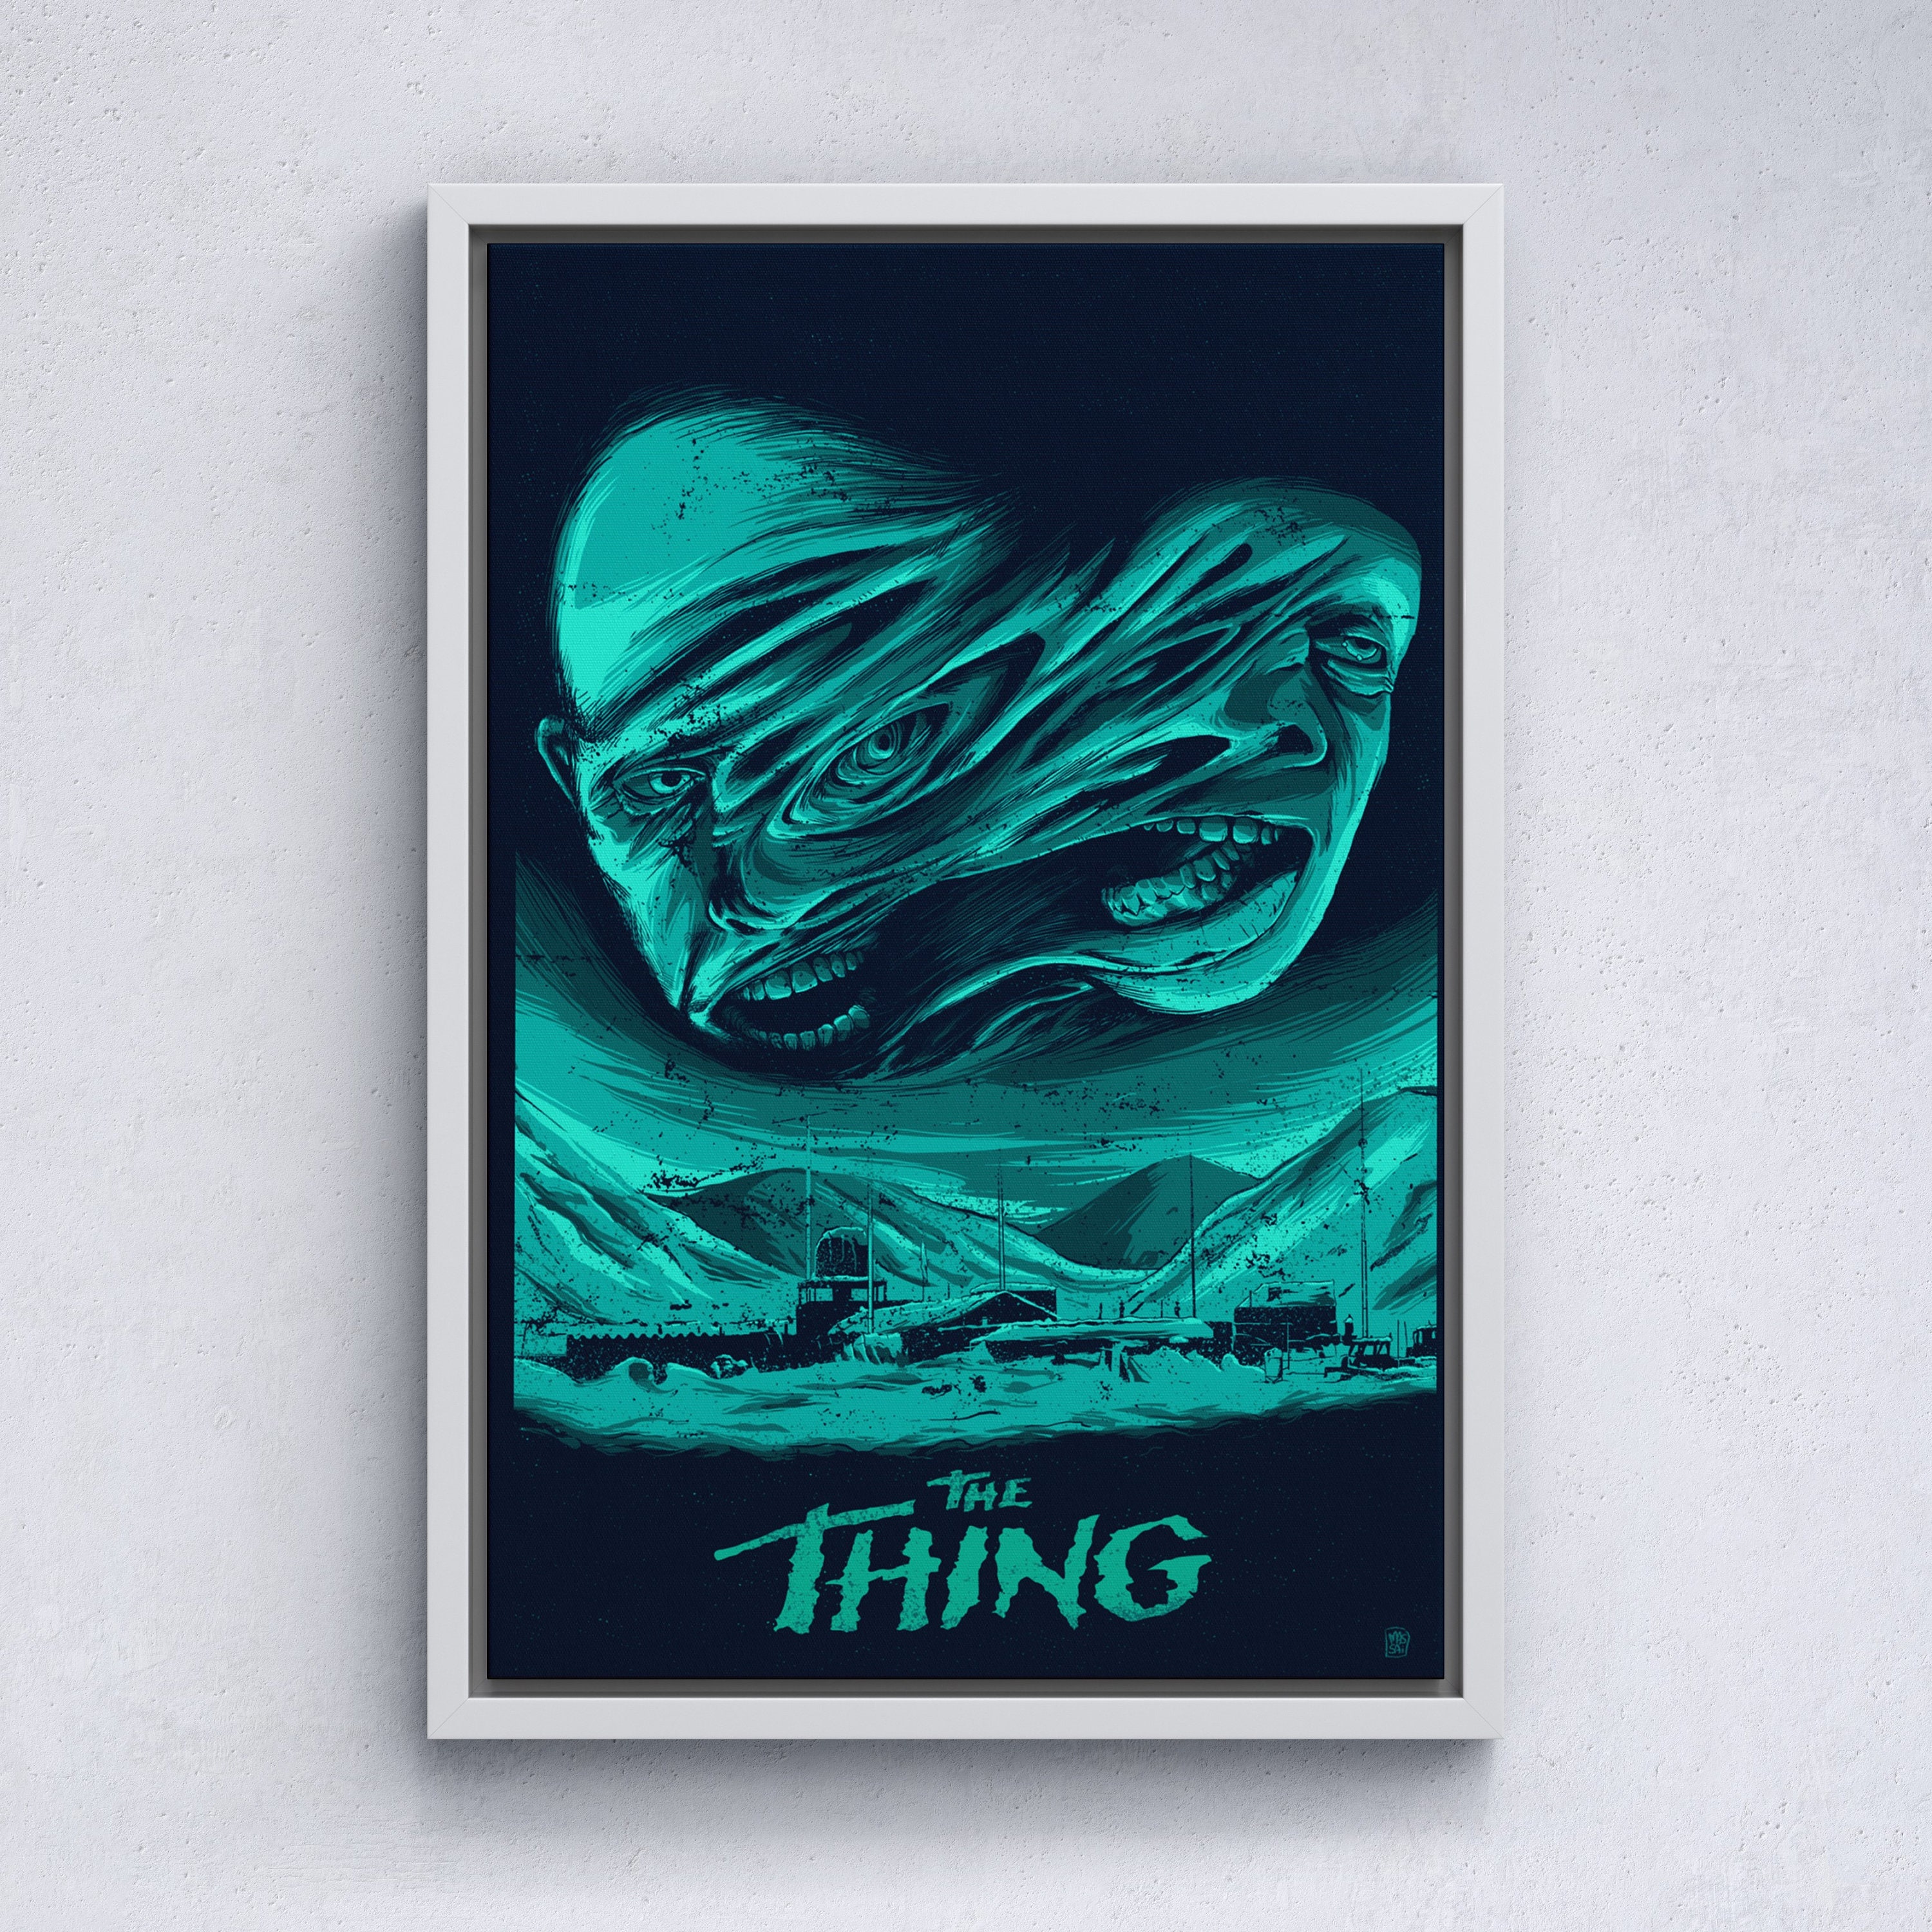 THE THING 1982 art print poster John Carpenter horror movie by Scott  Jackson 